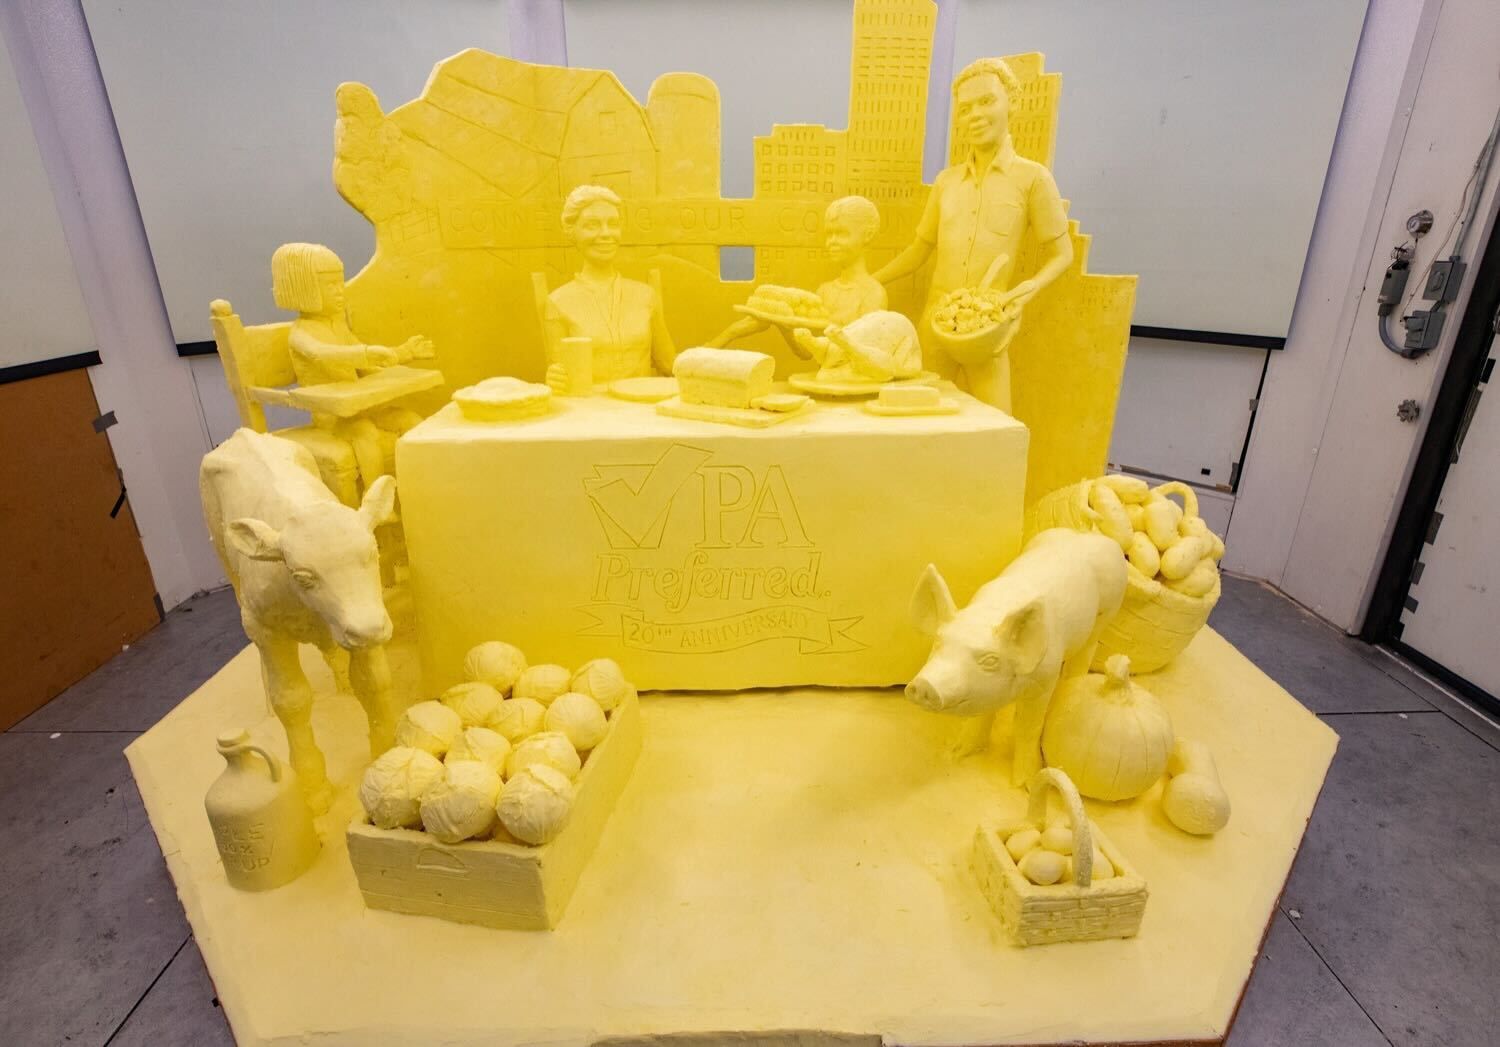 The Pennsylvania Farm Show's 1,000-pound butter sculpture delights